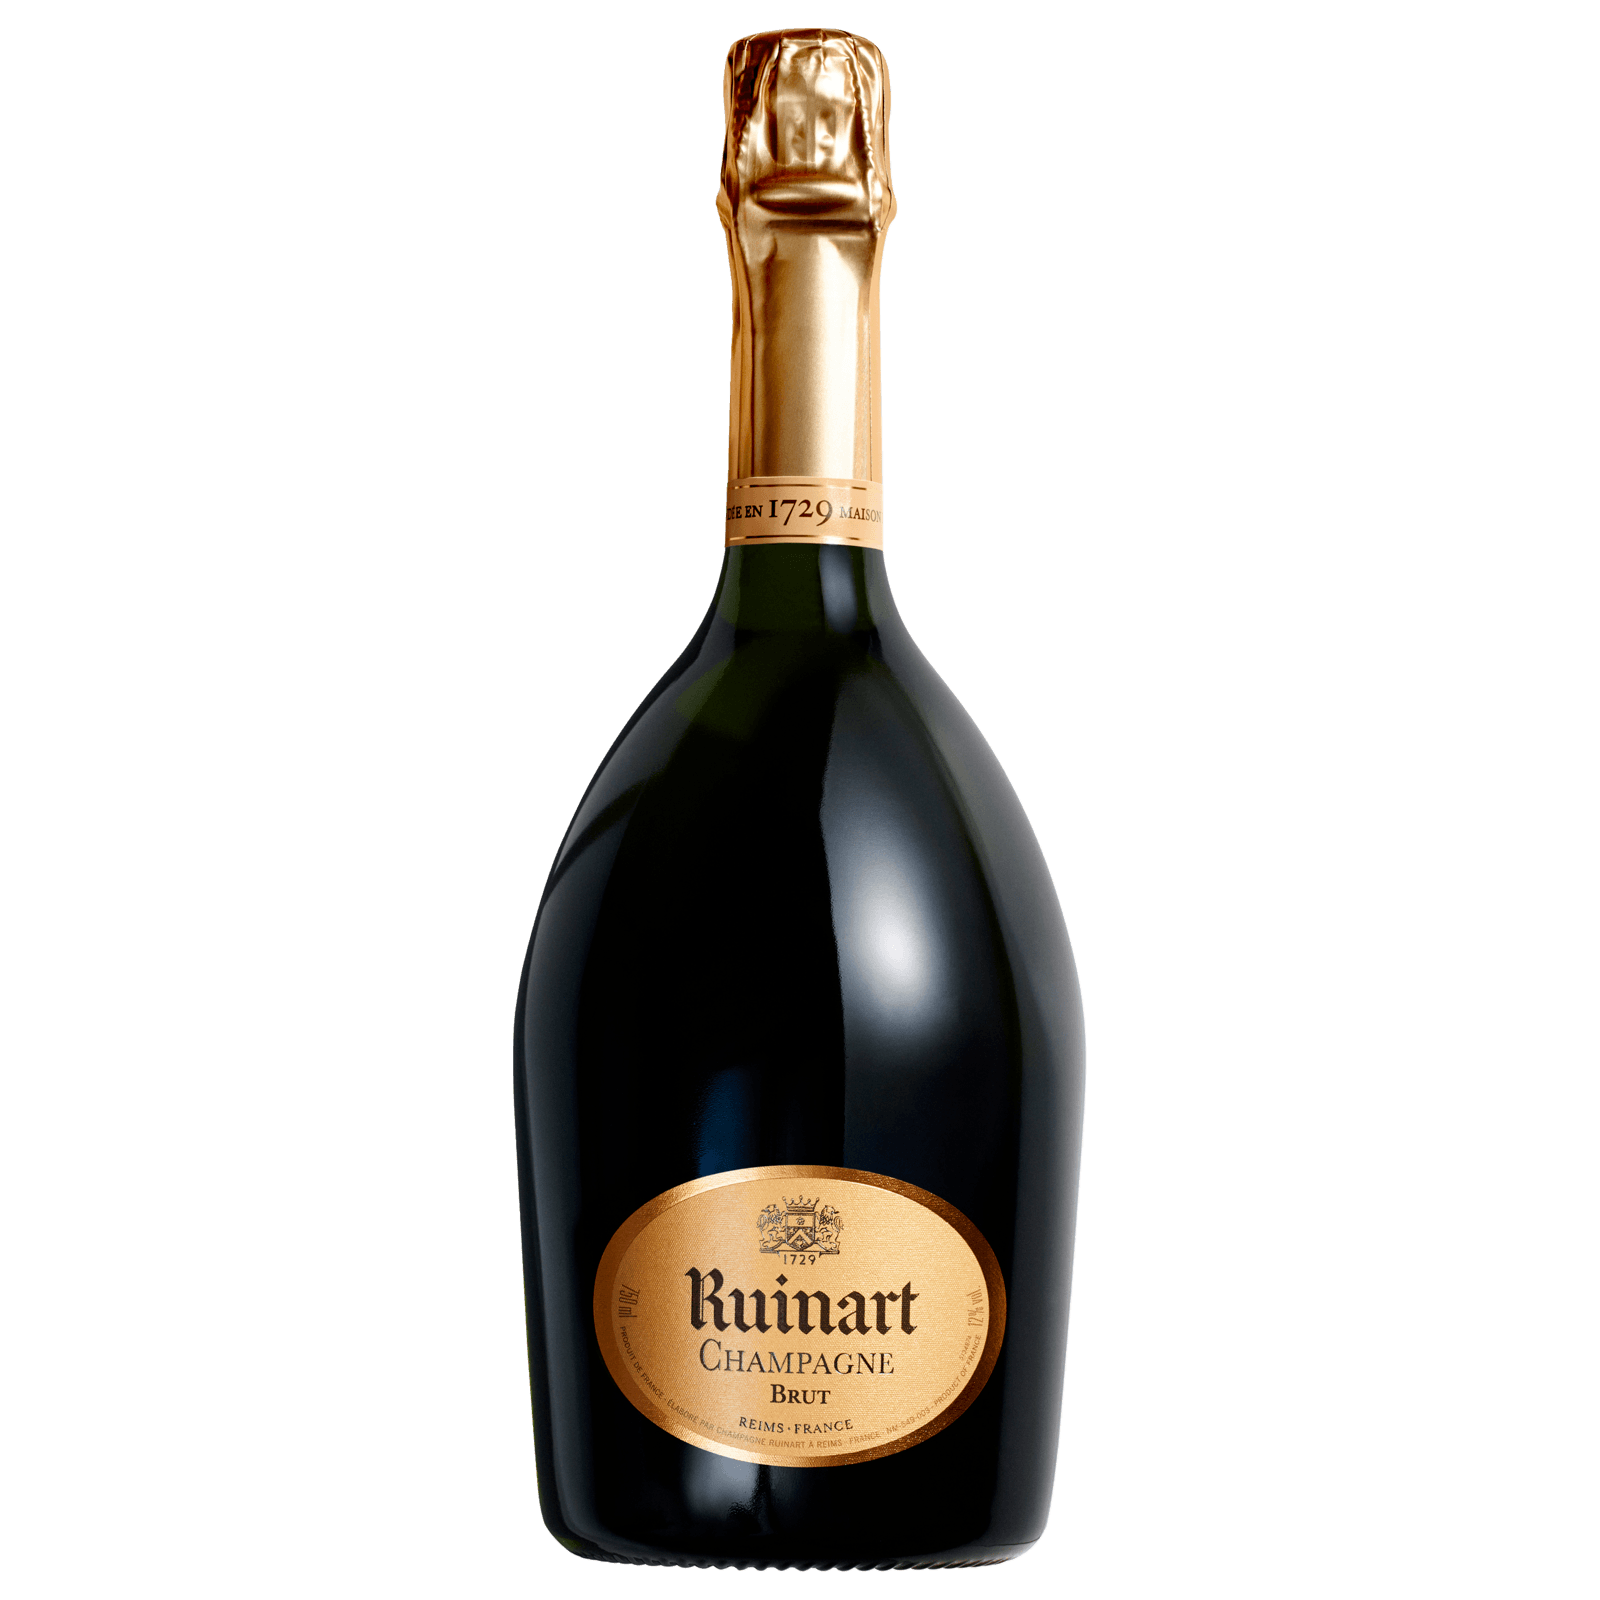 Champagne Chanoine Héritage 1730 Cuvée brut, Champagner für 22,99€ von Lidl